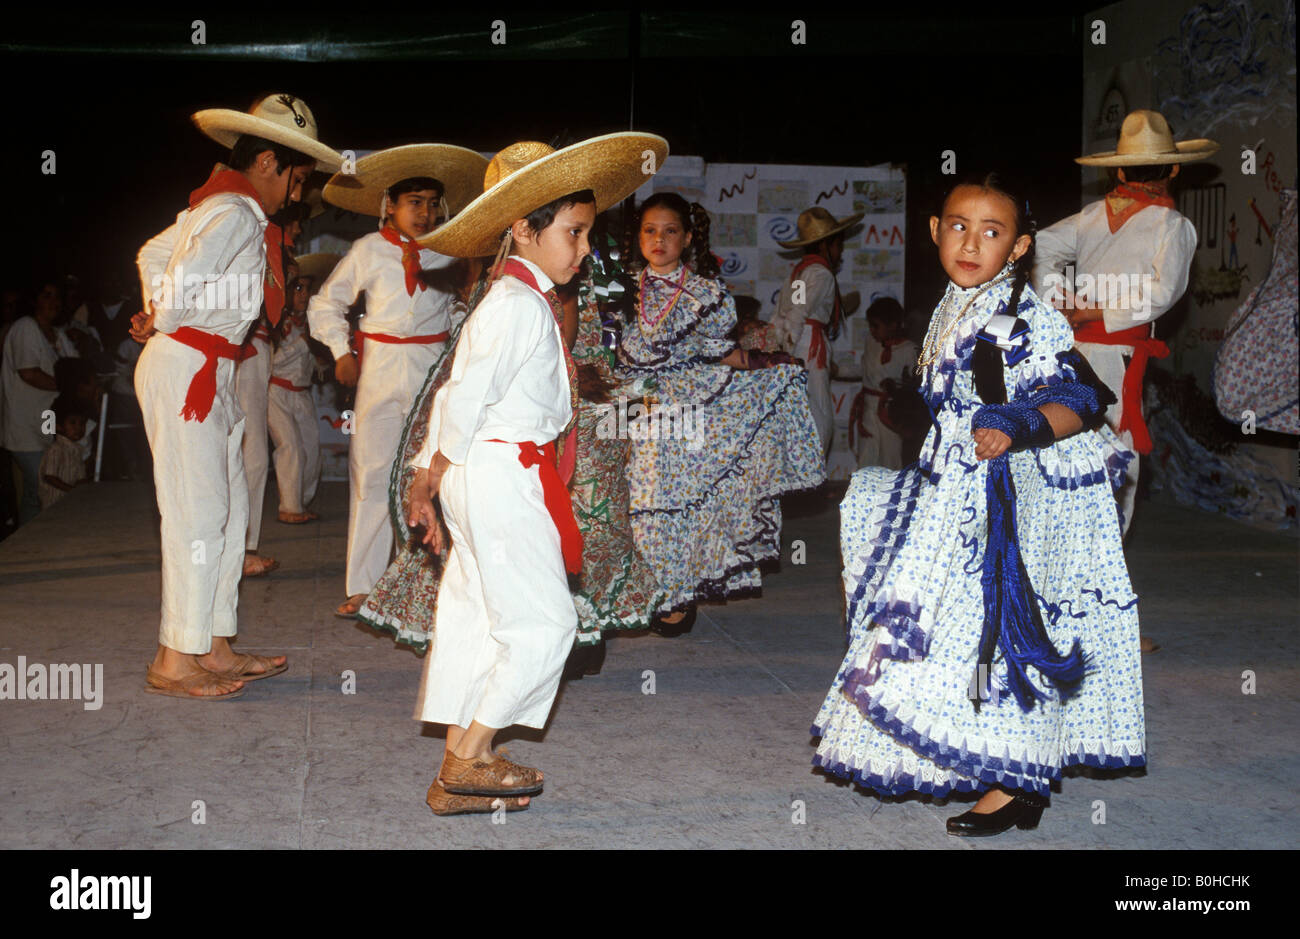 Children wearing folk dresses dancing traditional folklore dances, Guadalajara, Jalisco, Mexico Stock Photo